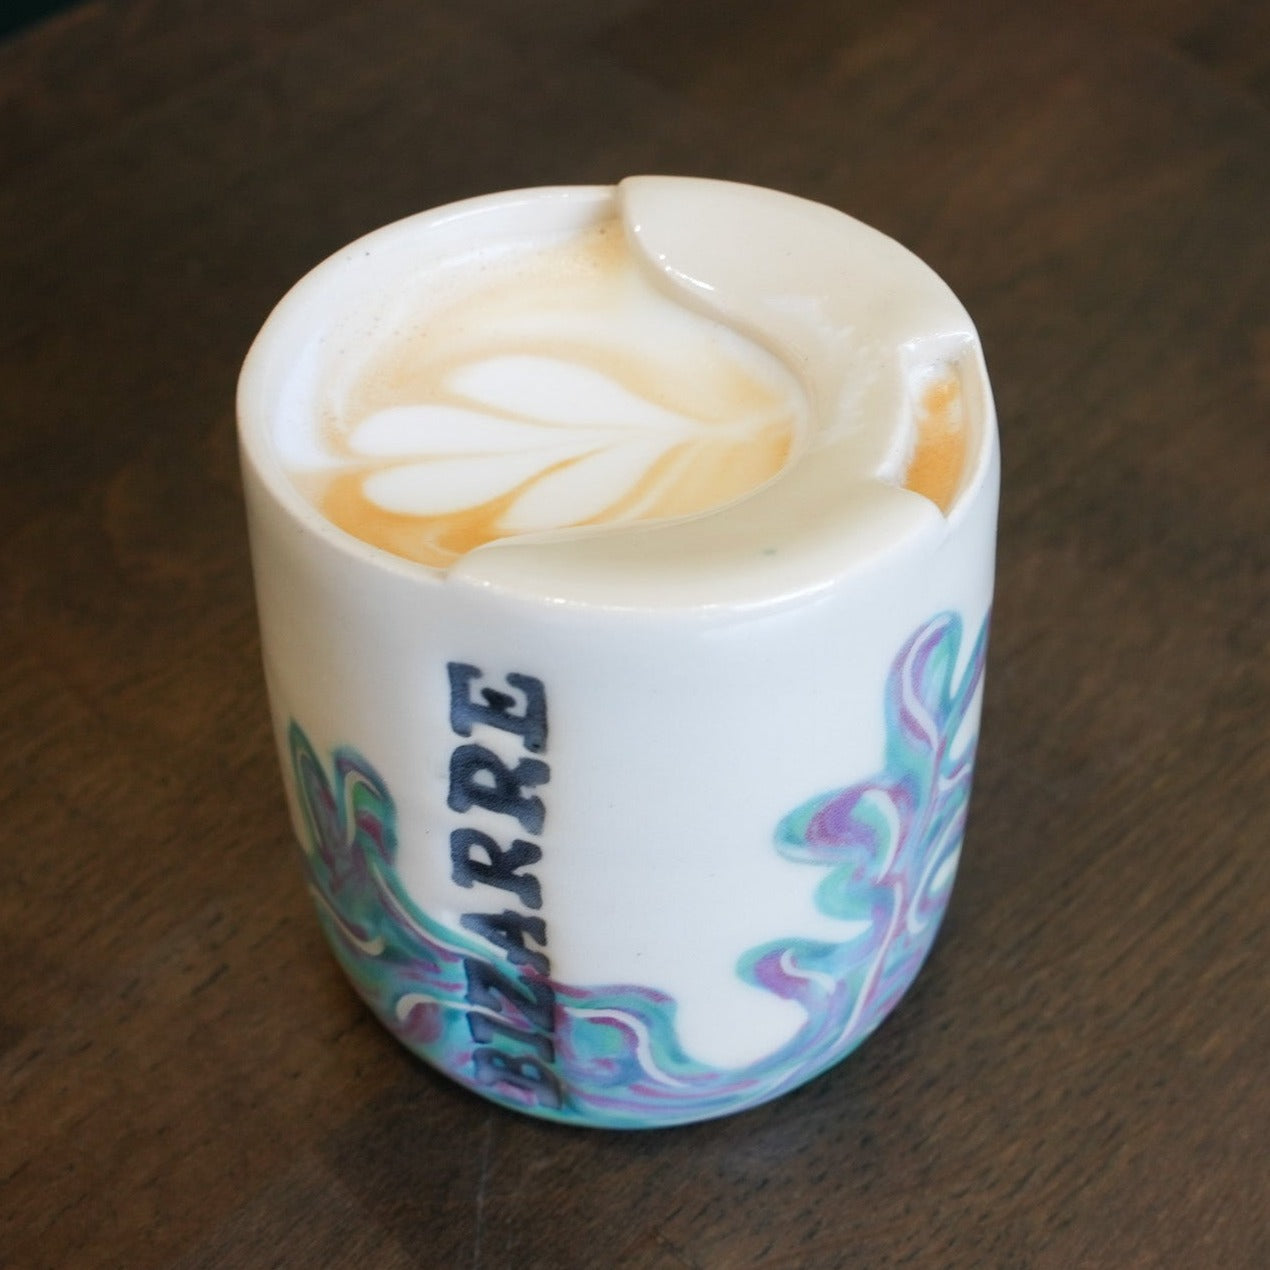 Sipper Clay mug for Bizarre Coffee